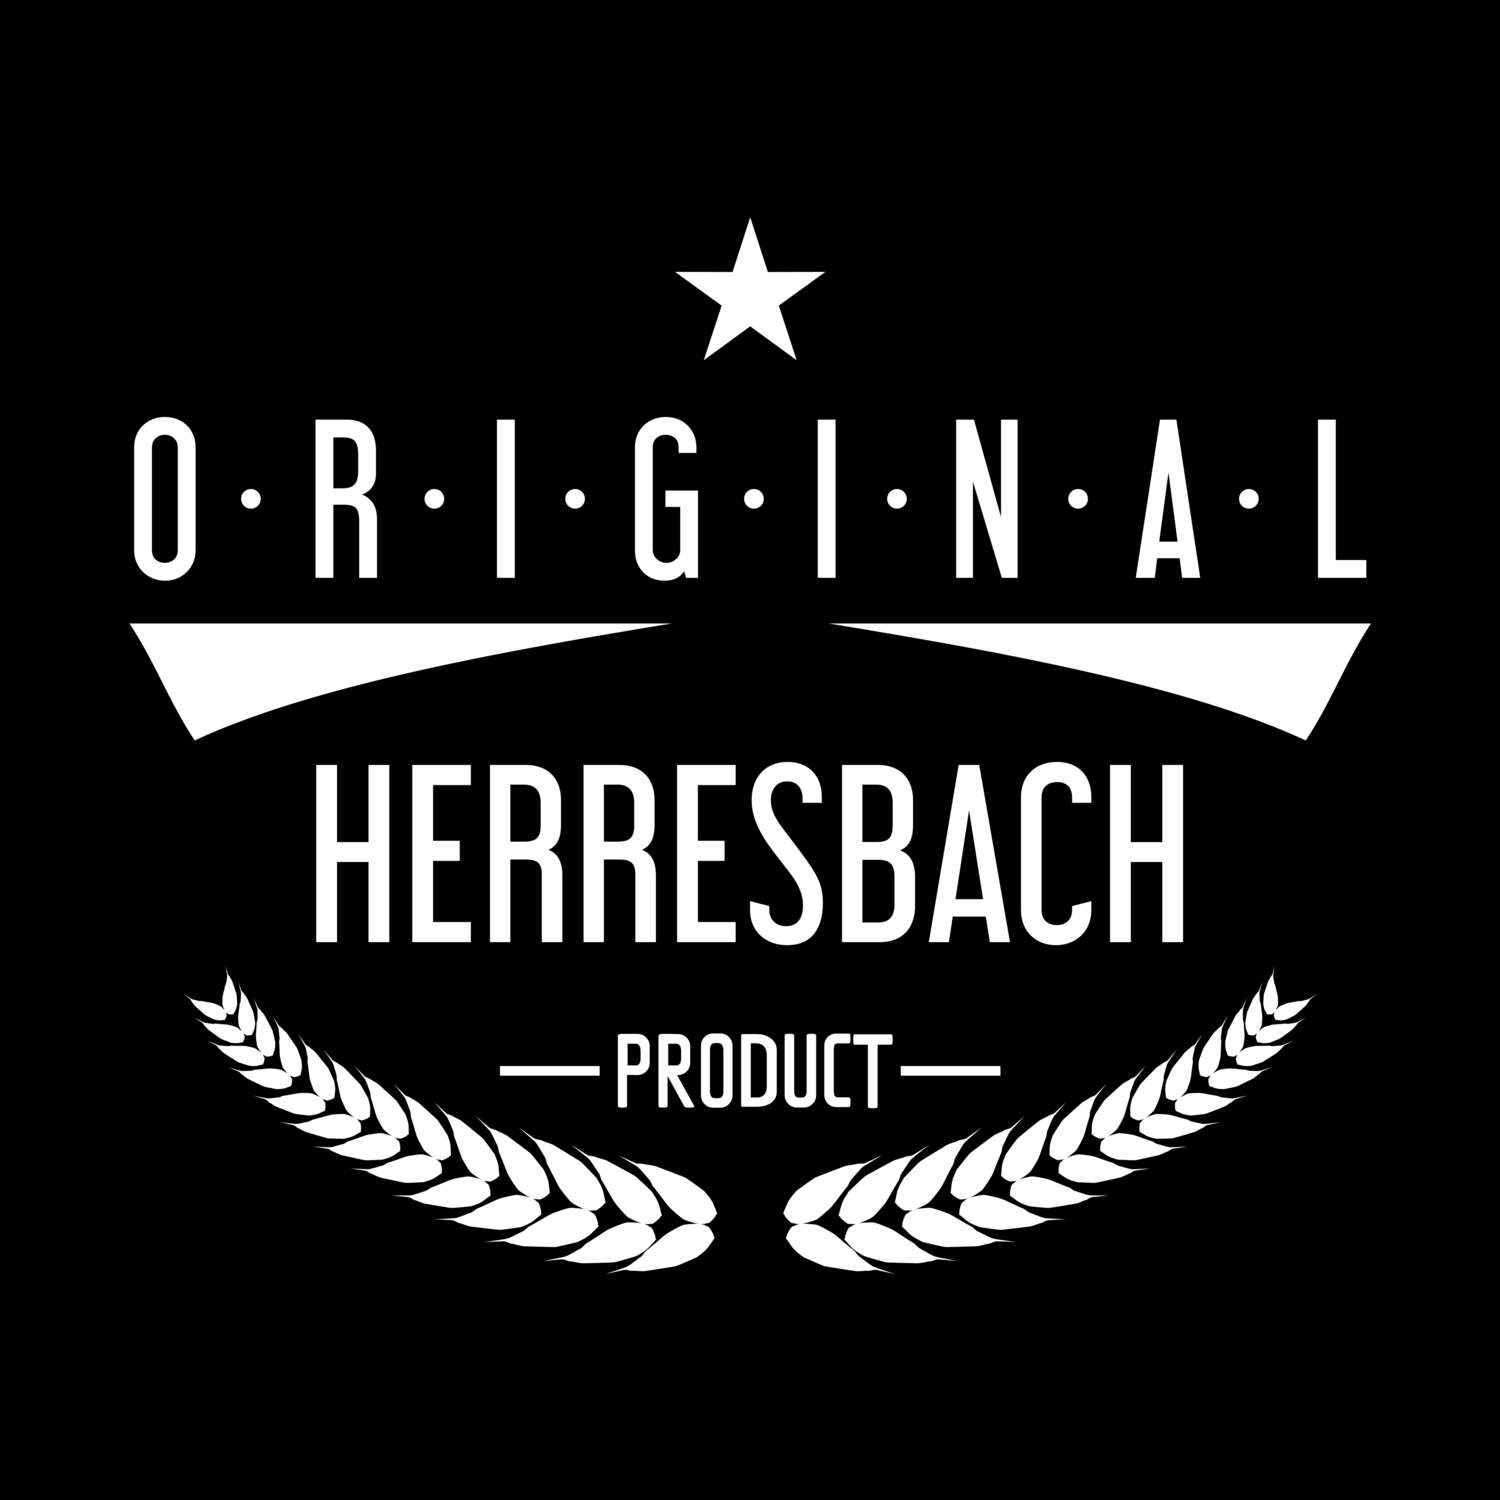 Herresbach T-Shirt »Original Product«